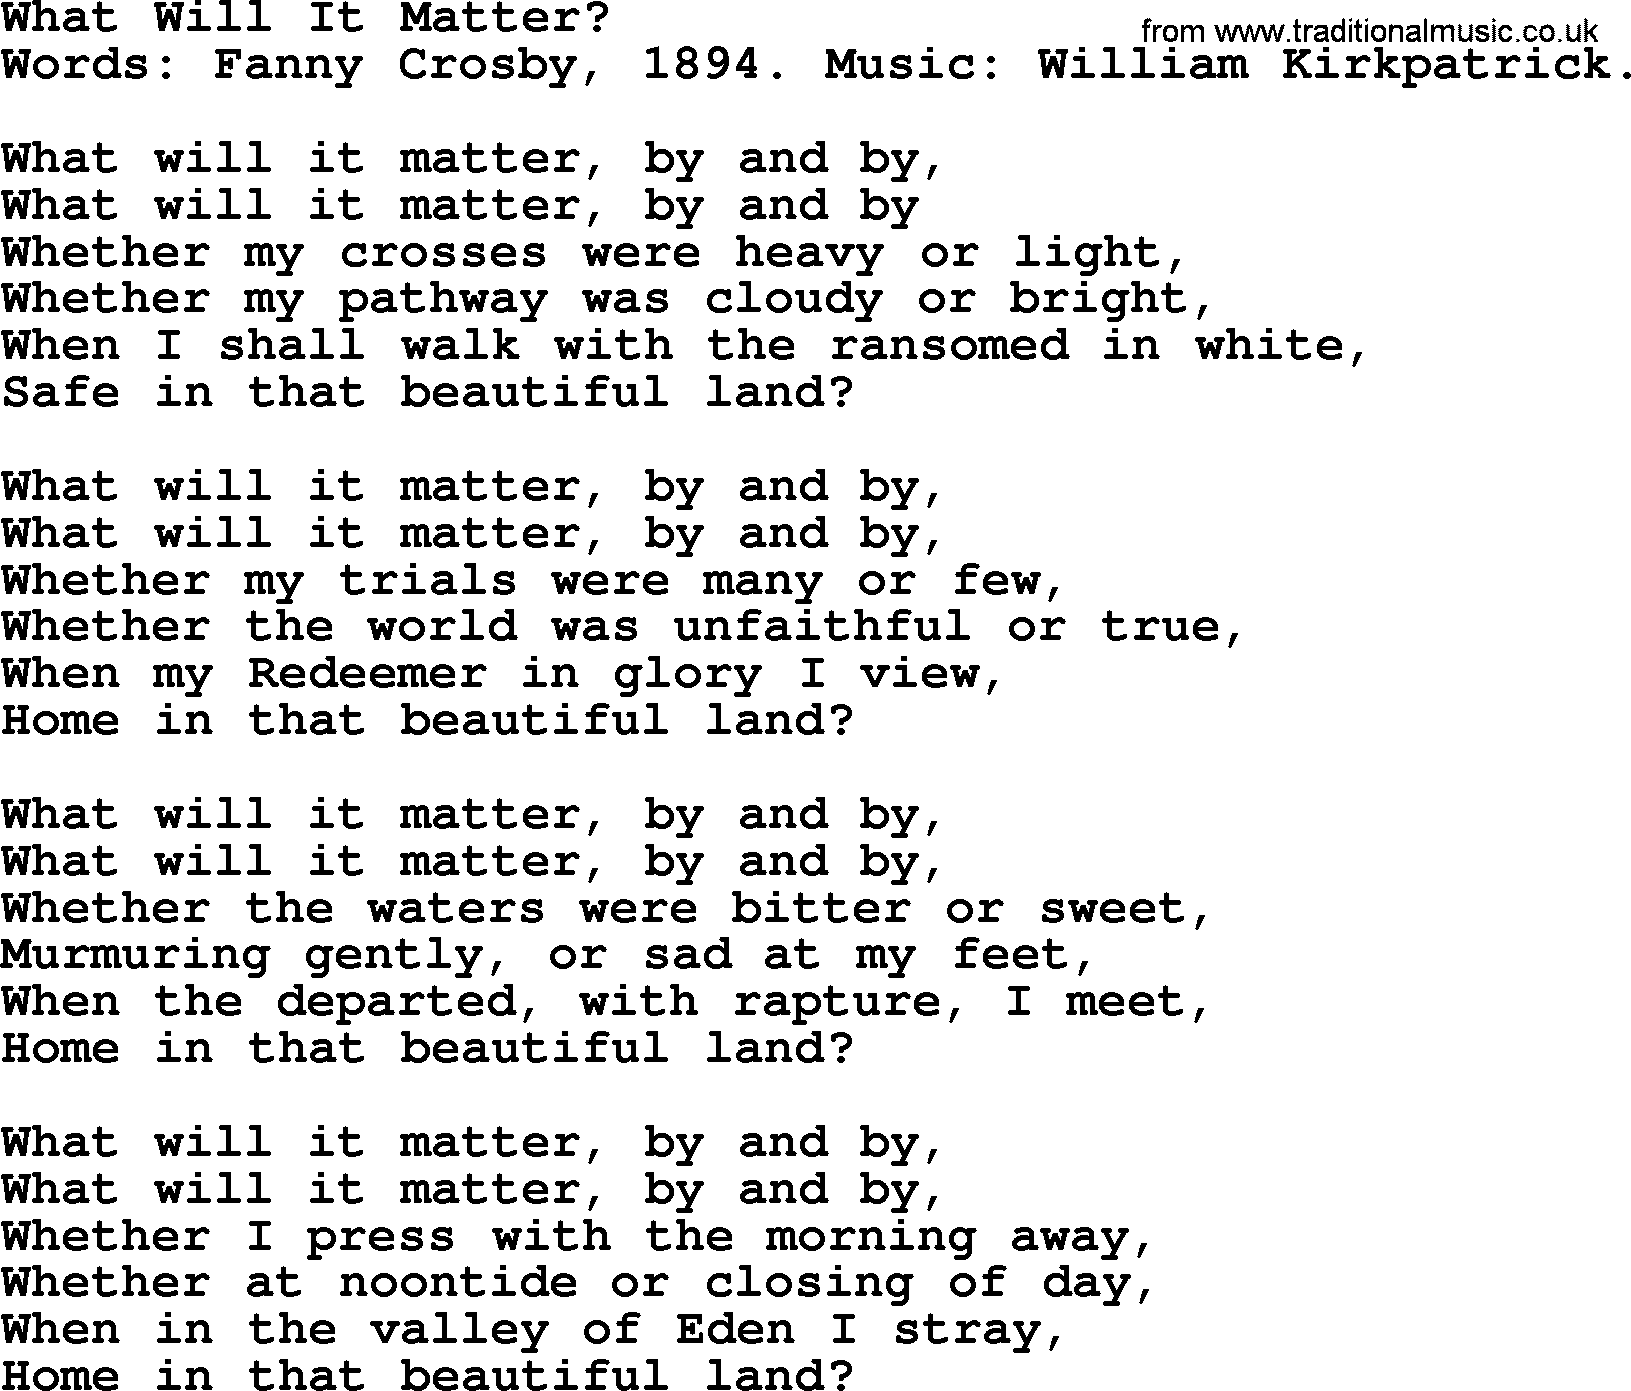 Fanny Crosby song: What Will It Matter, lyrics